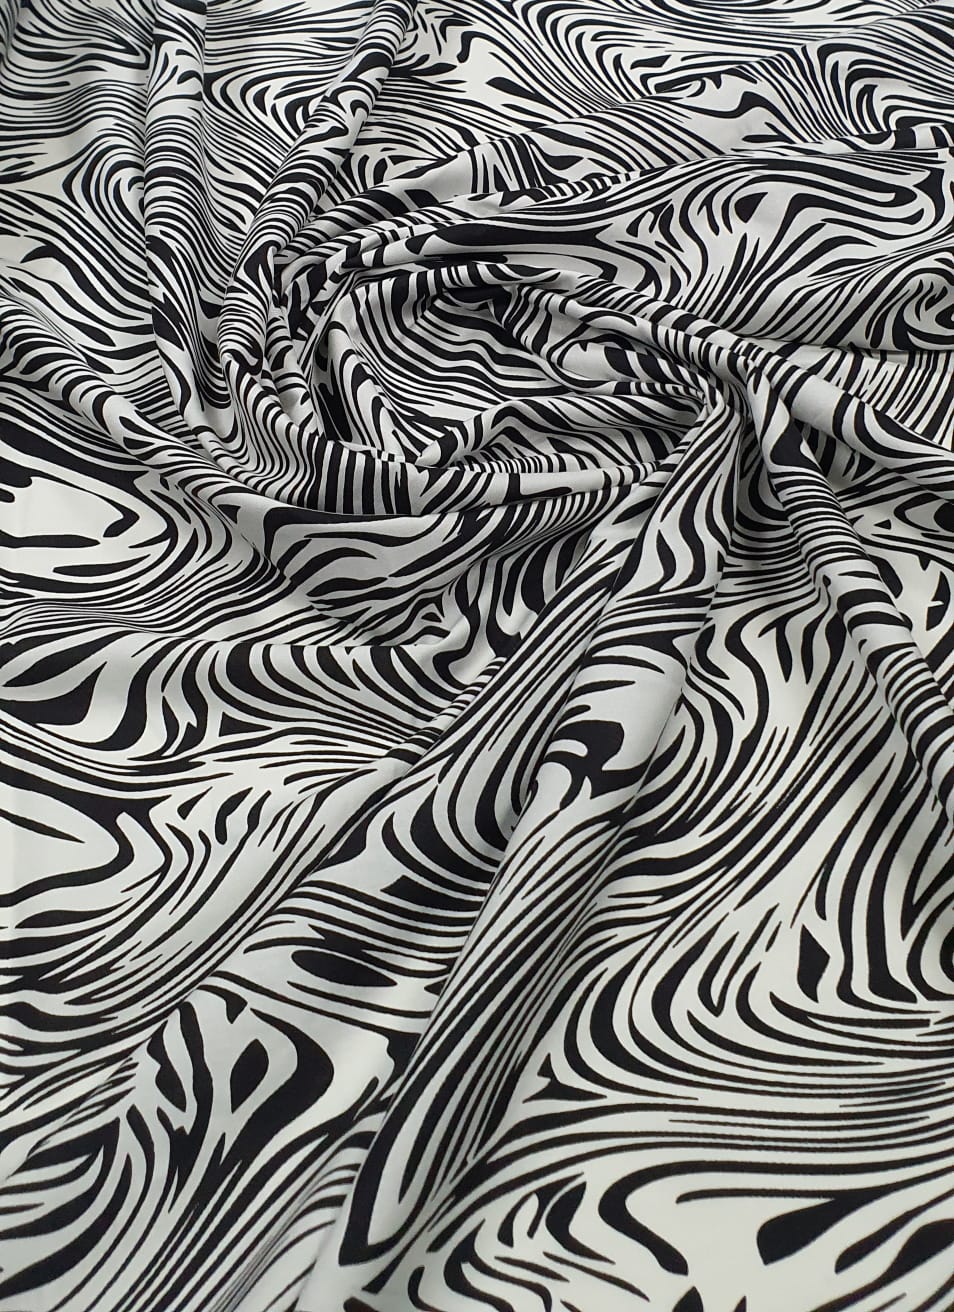 Popeline de Viscose Estampada Zebra Menor